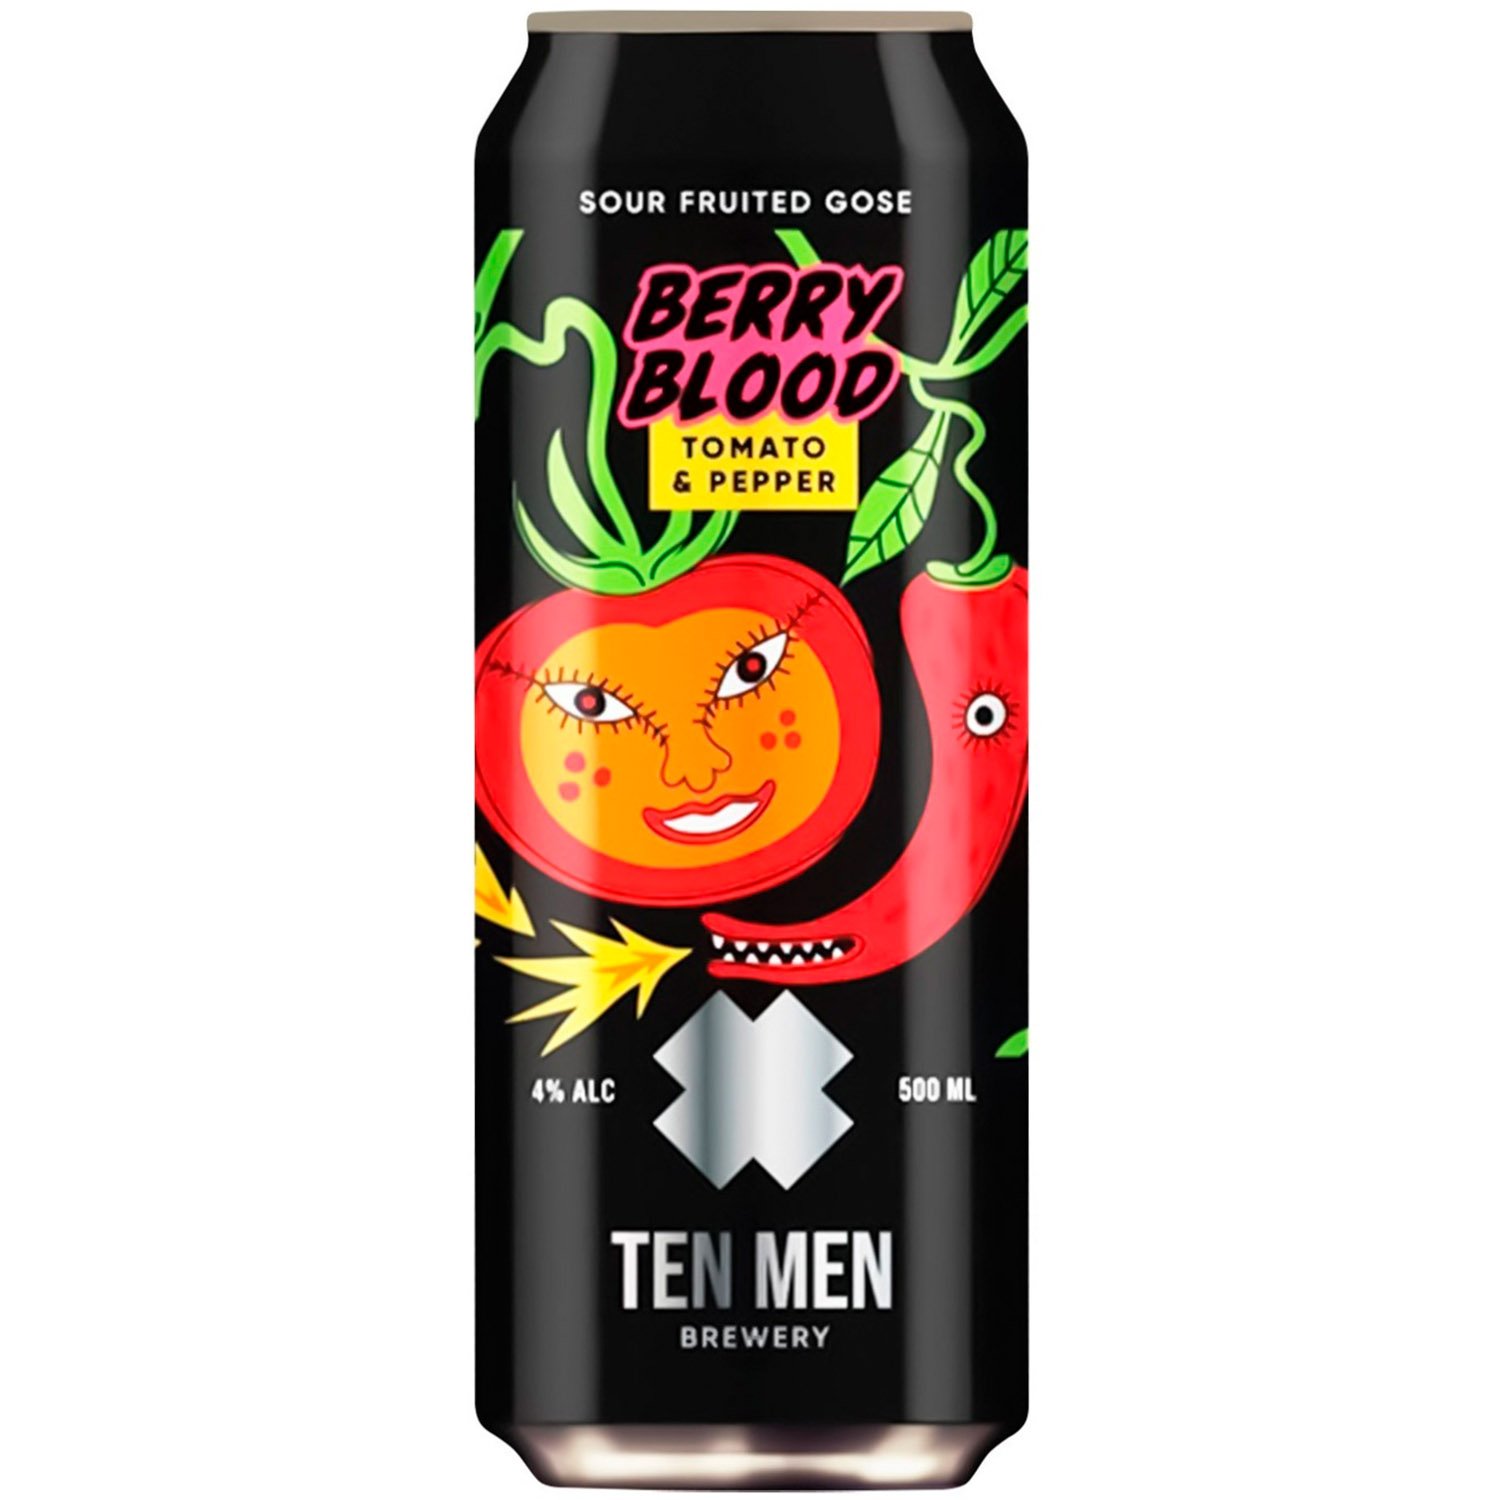 Пиво Ten Men Brewery Berry Blood Tomato&Pepper Sour Fruited Gose, полутемное, 4%, ж/б, 0,5 л - фото 1